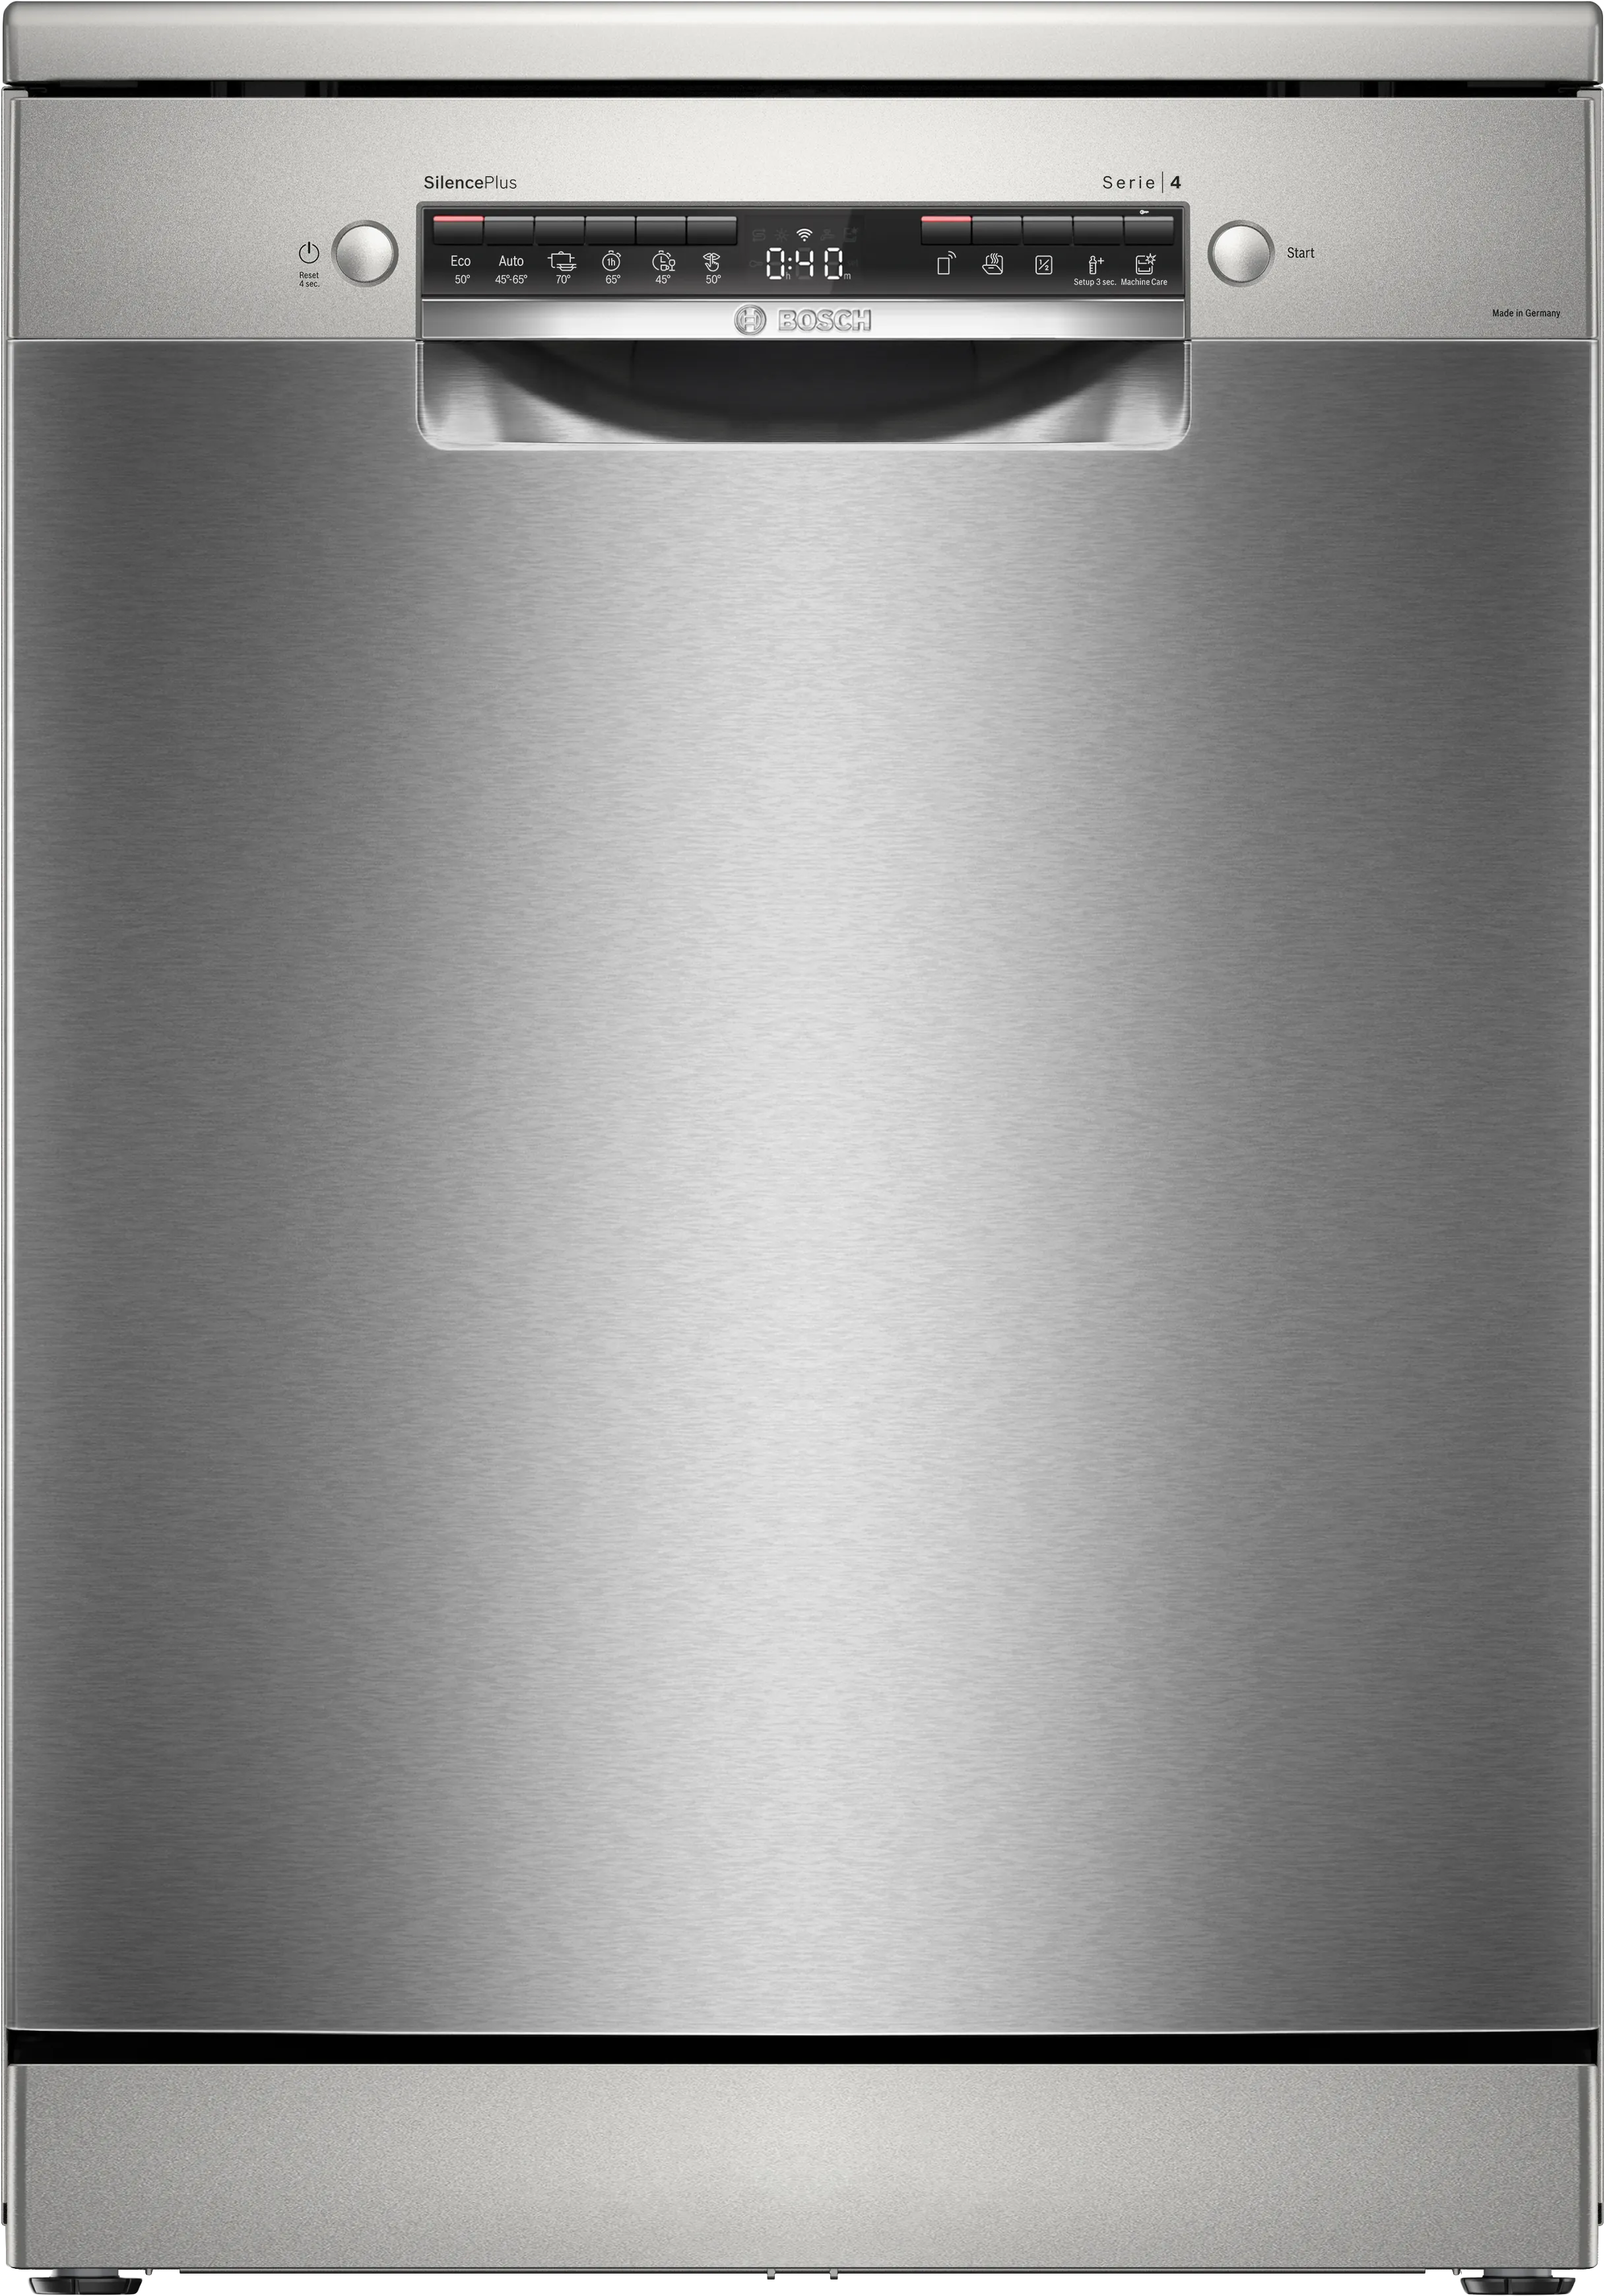 Series 4 free-standing dishwasher 60 cm silver inox 